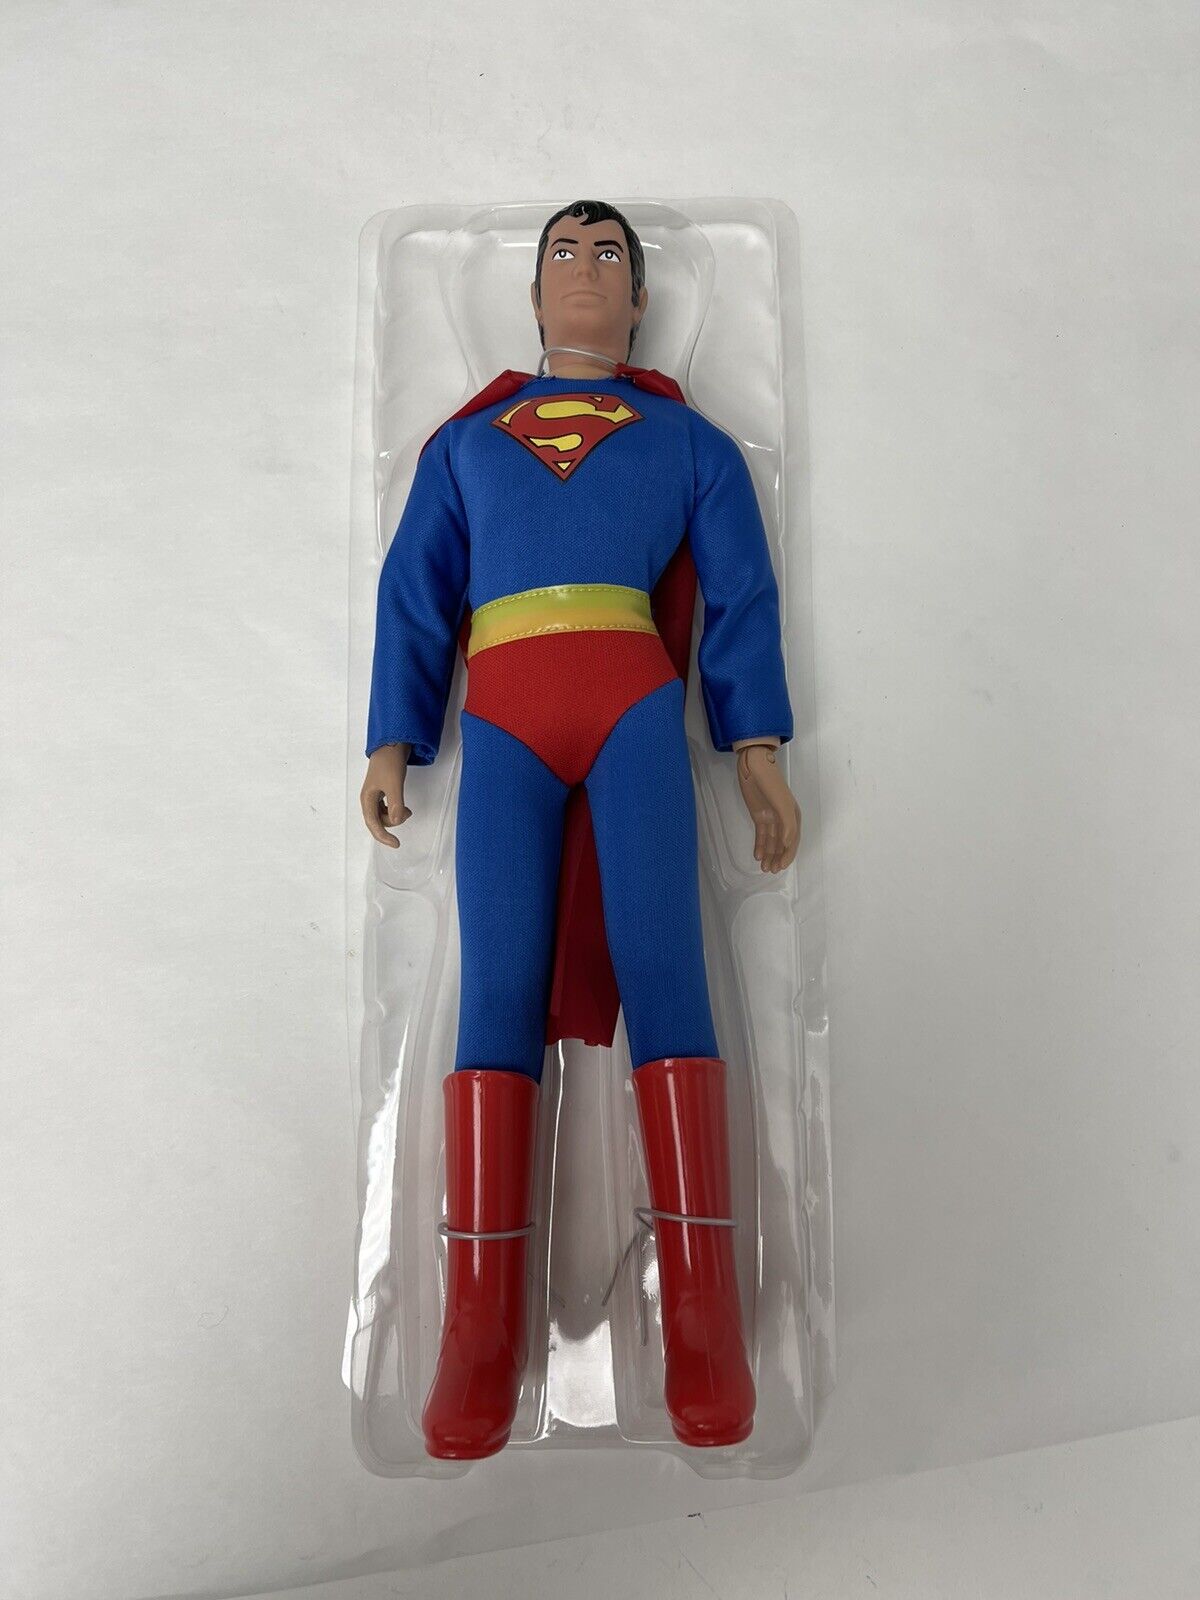 12 Inch Retro DC Comics Action Figures Series: Superman  NEW NO BOX